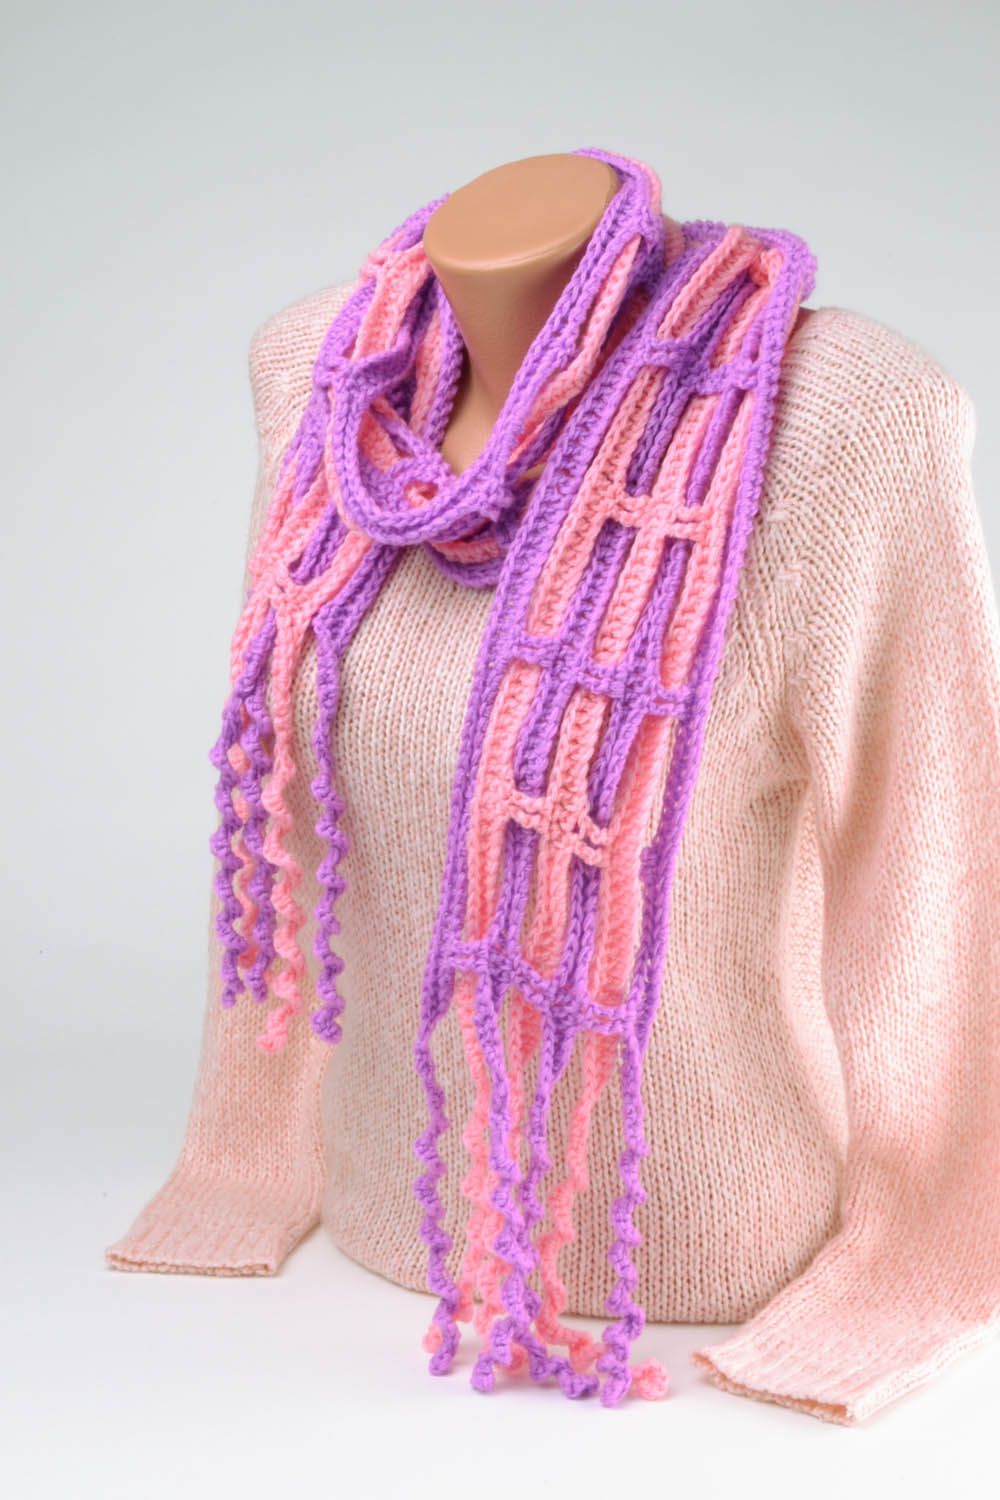 Violet crochet scarf photo 2